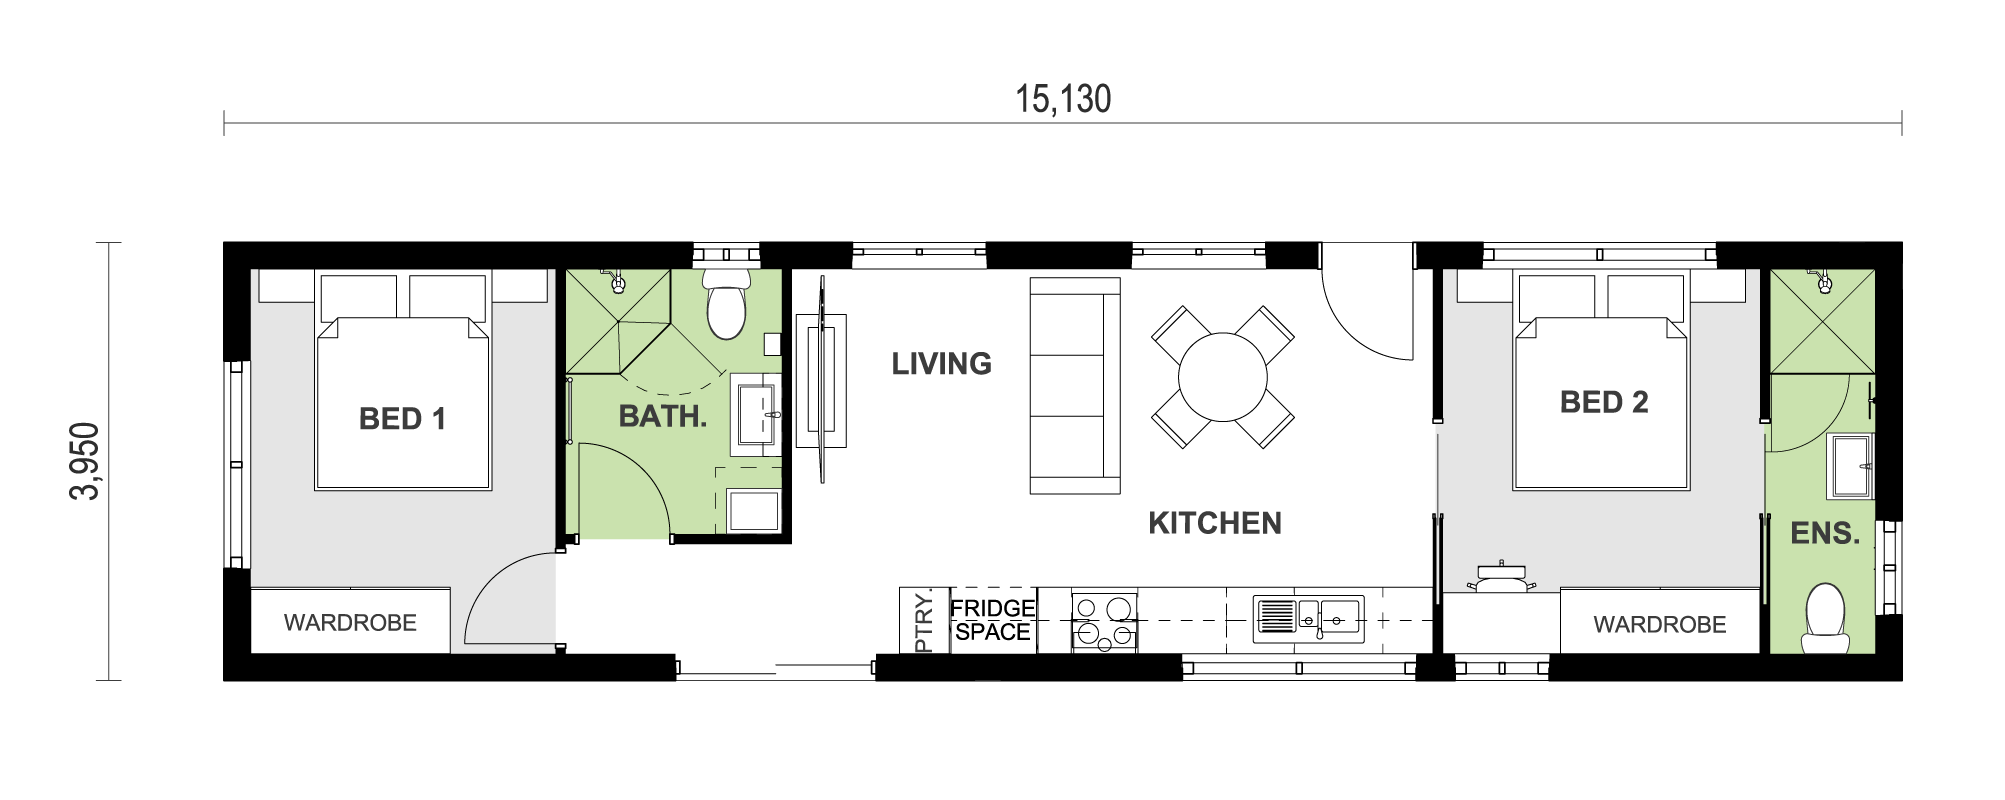 Baulkham hills granny flat floor plan